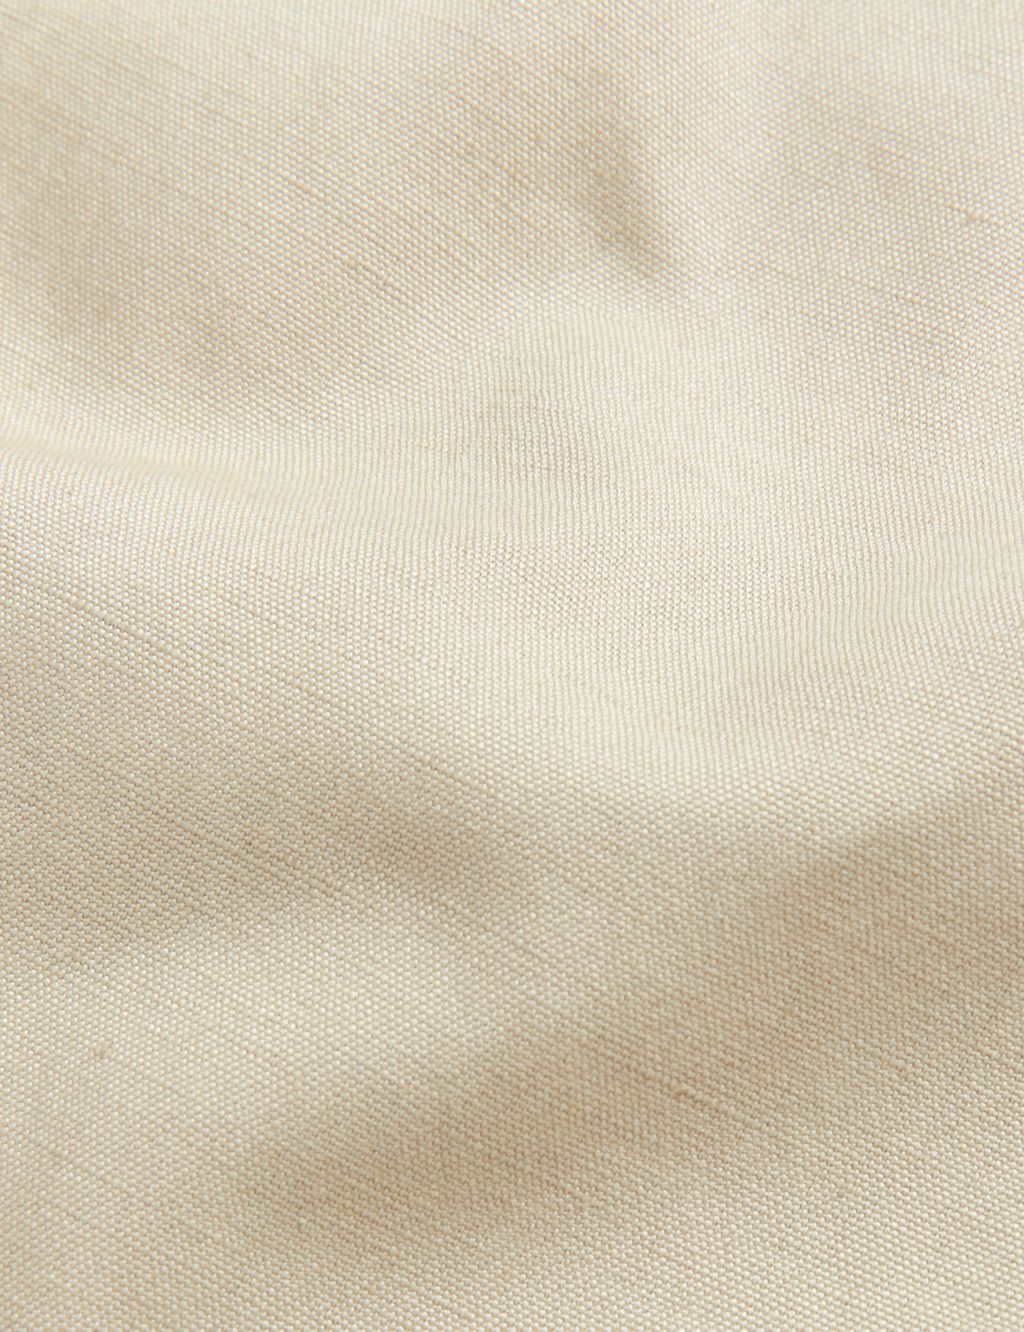 Regular Fit Italian Silk And Linen Jacket image 4